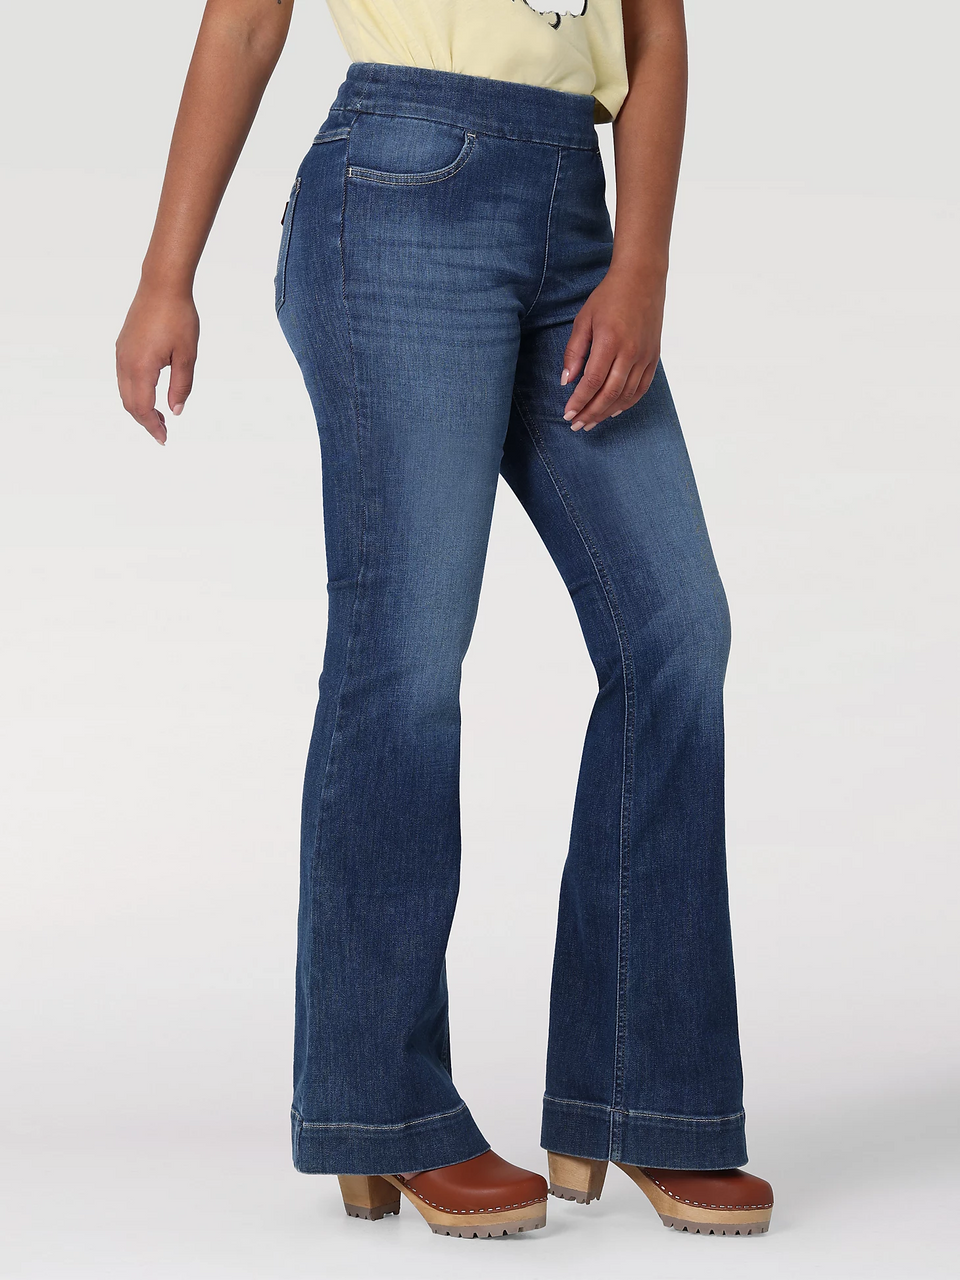 Best 25+ Deals for High Waisted Wrangler Jeans